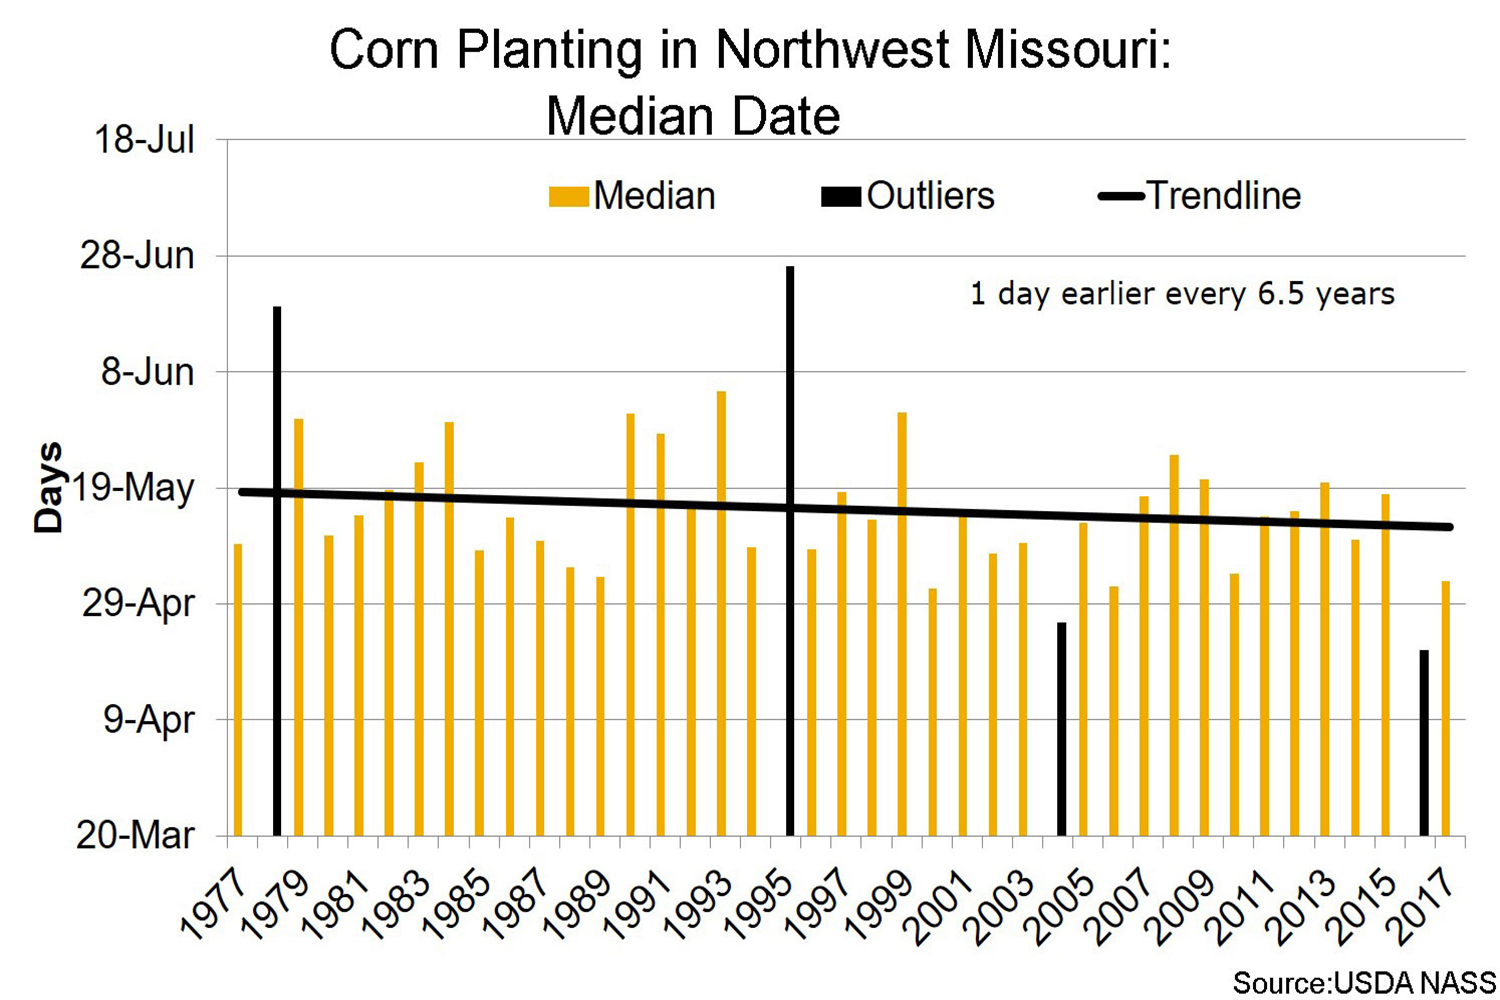 Corn planting in Morthwest Missouri median date chart